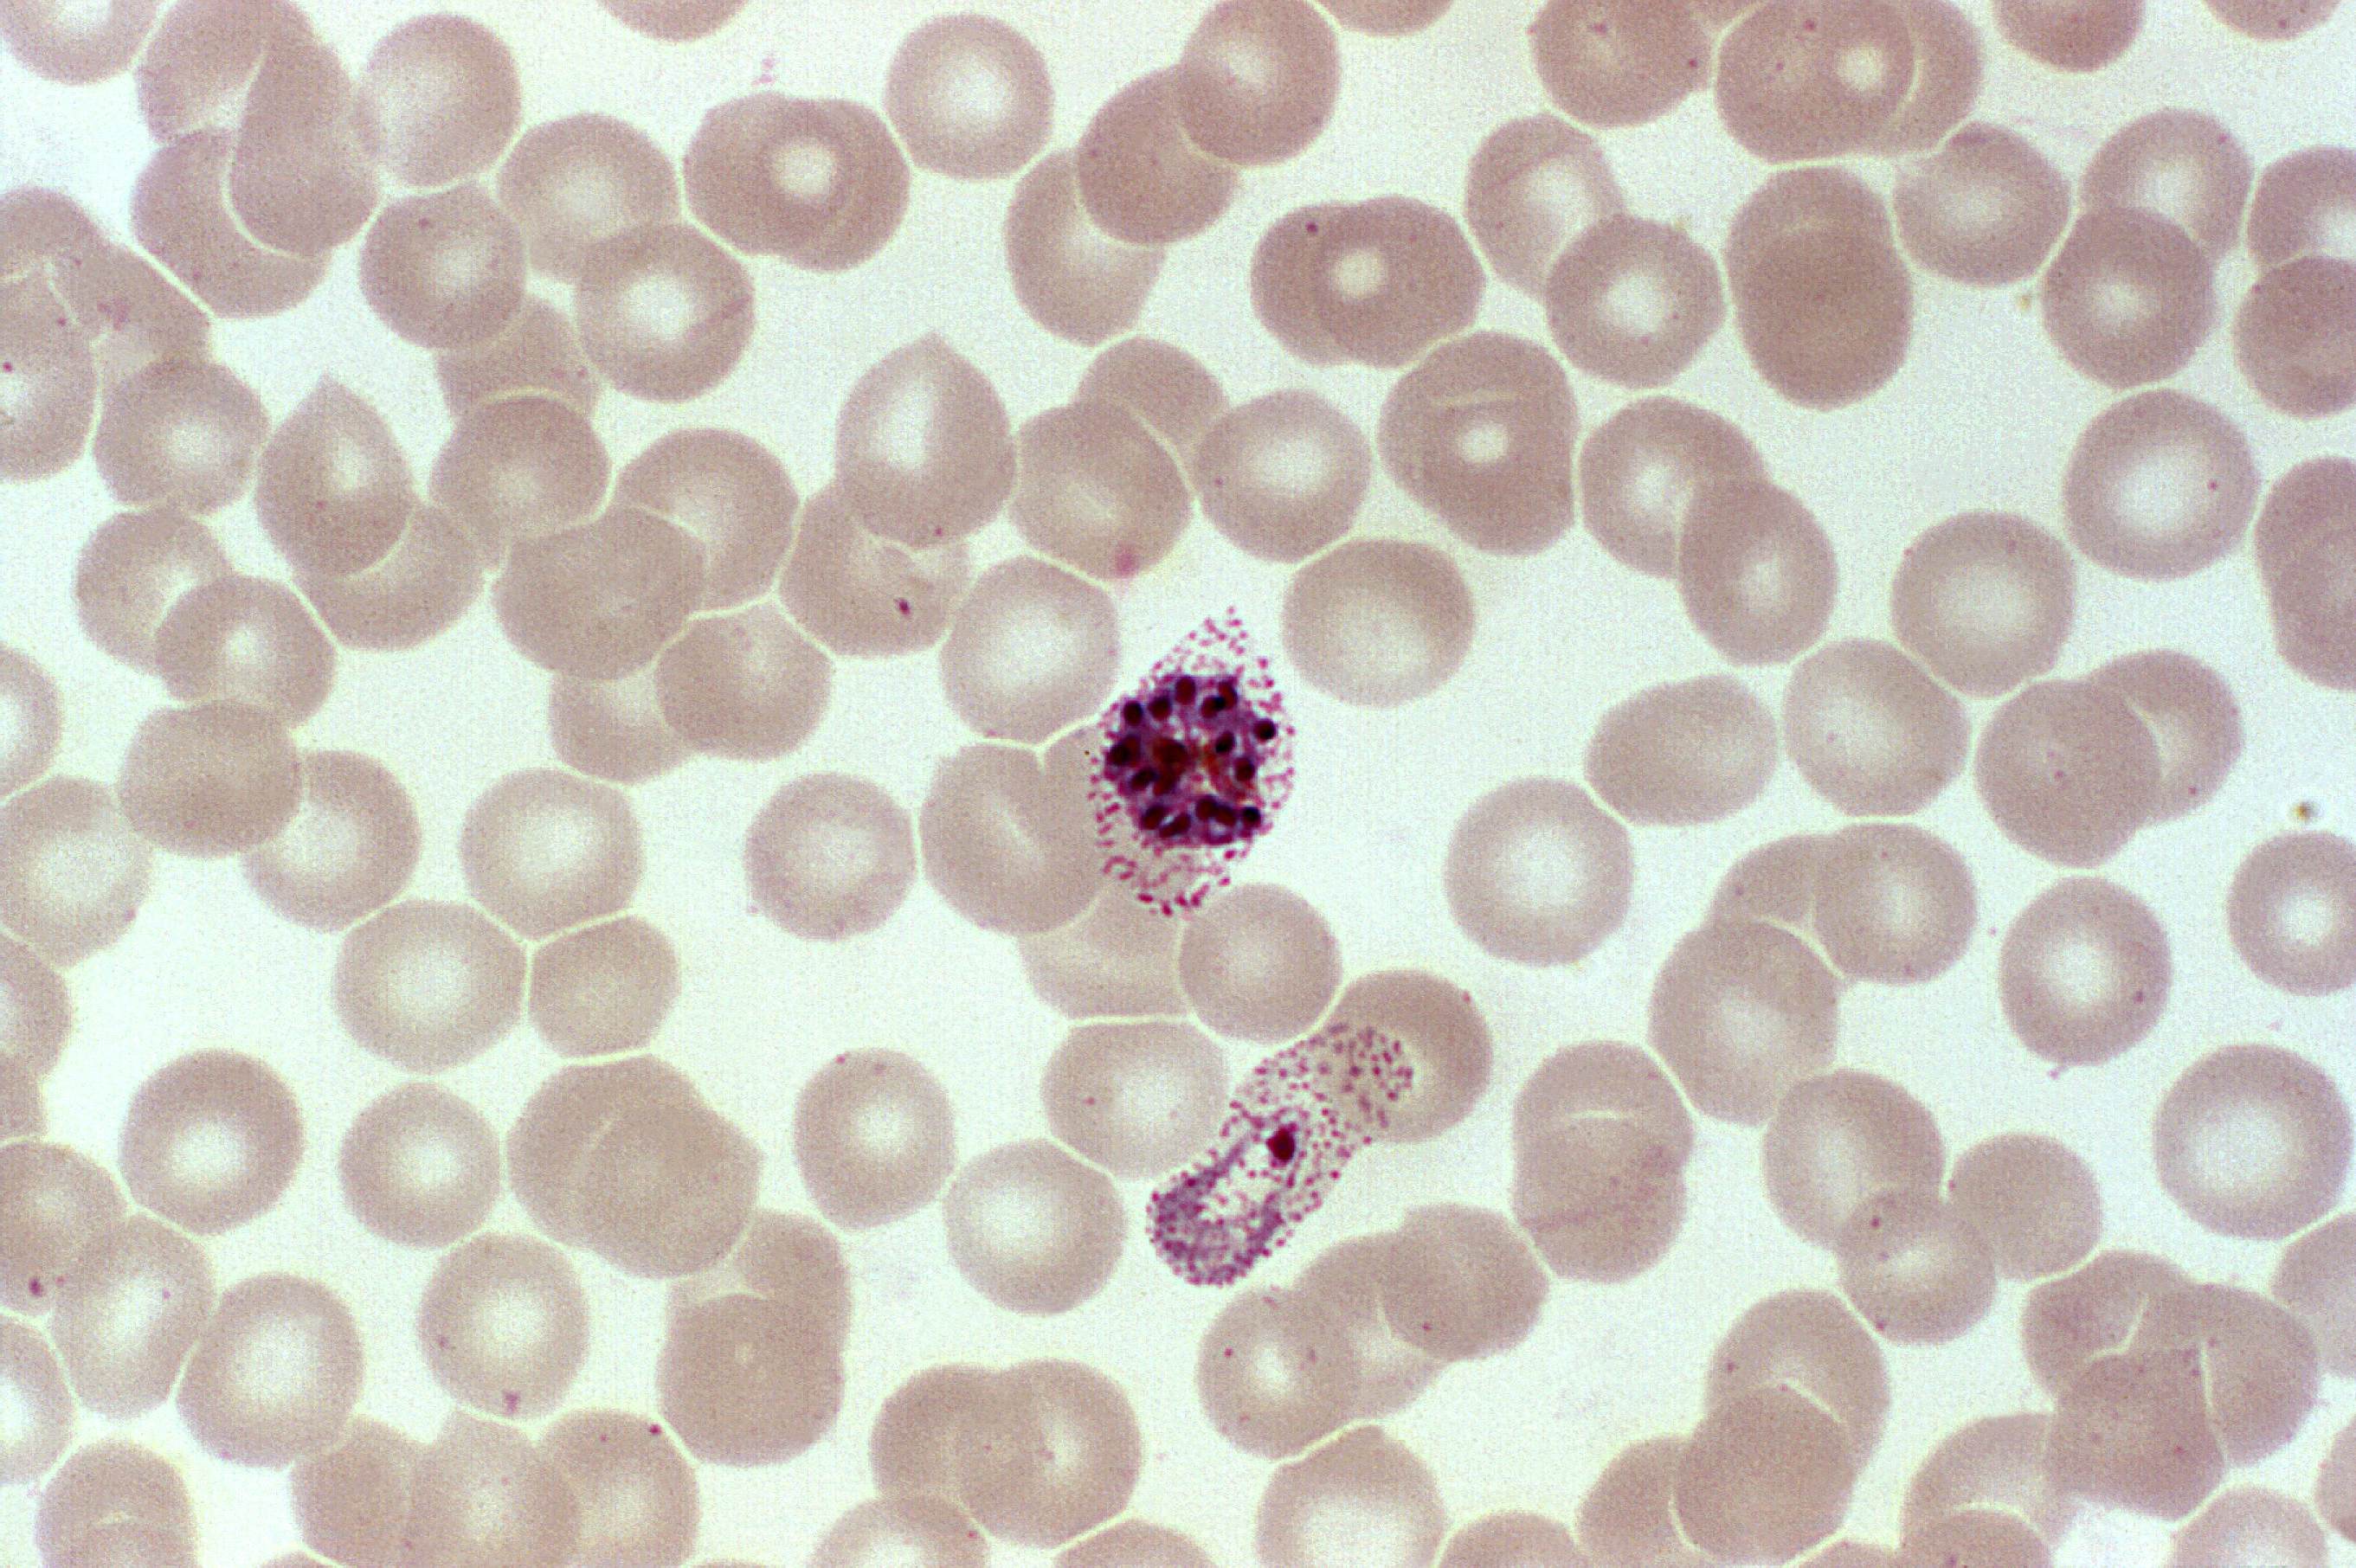 Малярийный плазмодий клетка. Плазмодий Vivax. Малярийный плазмодий Вивакс. Плазмодиум малярия Plasmodium malariae. Малярийный плазмодий микроскопия.